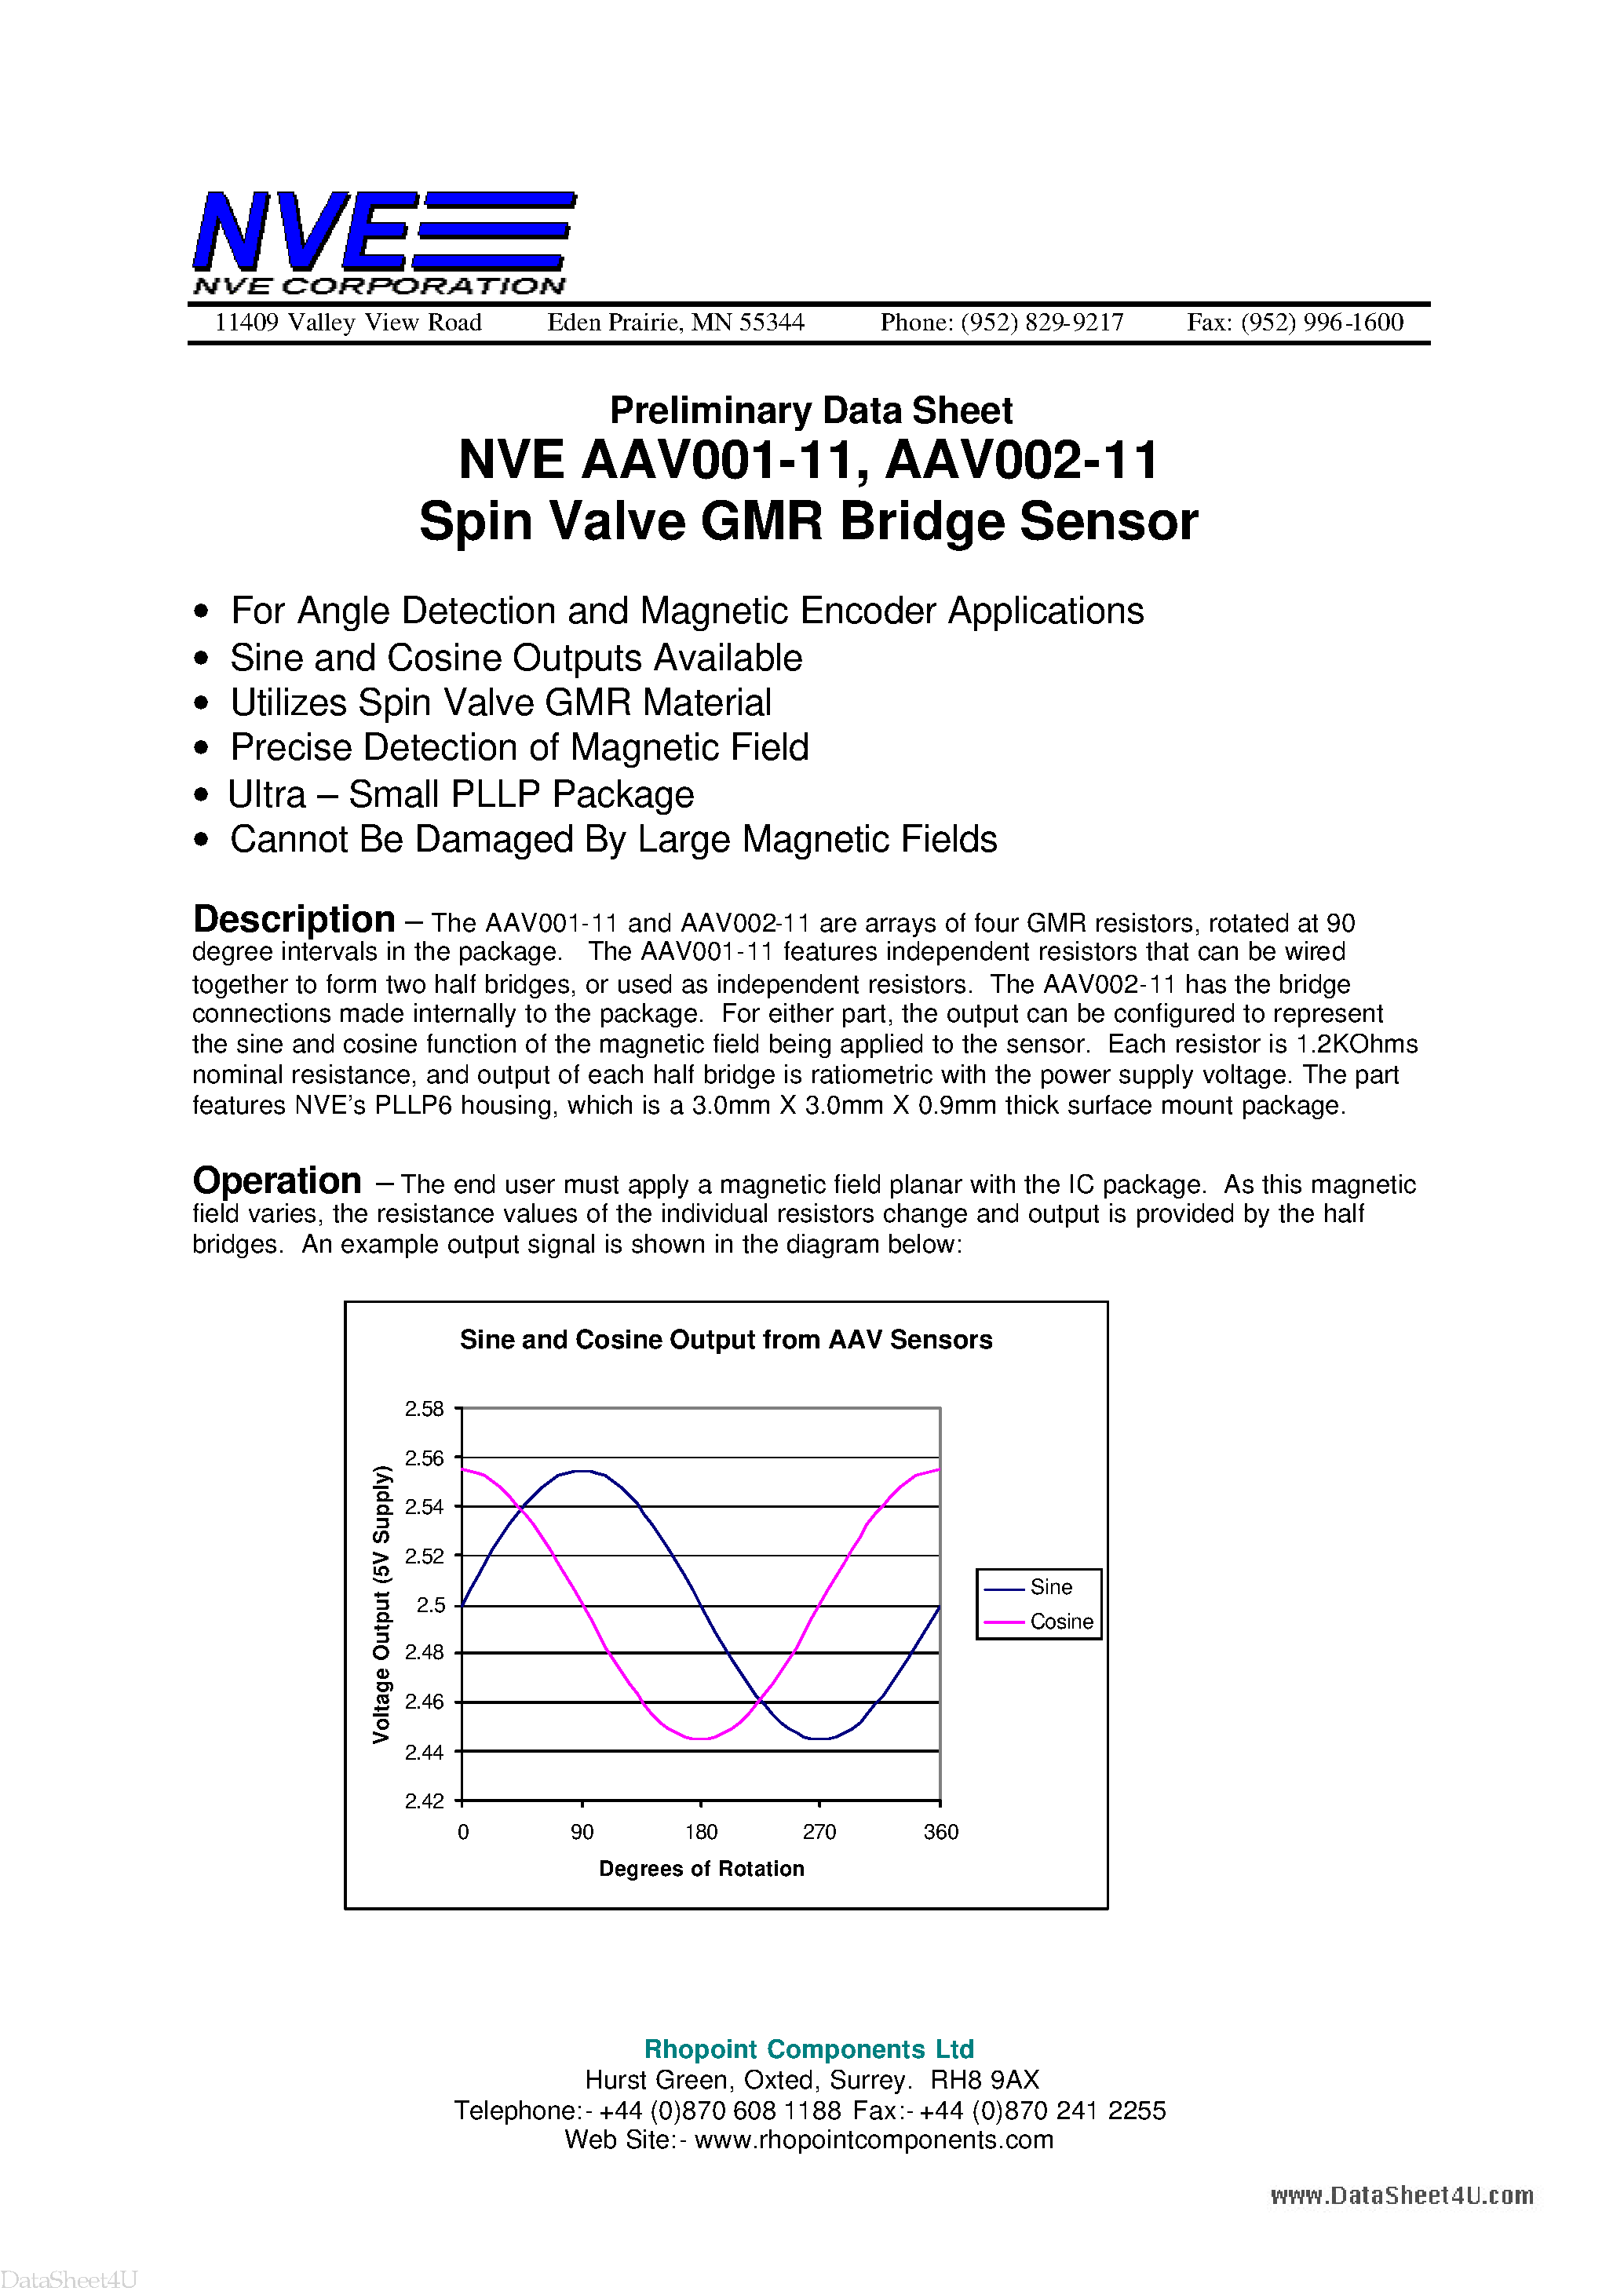 Datasheet AAV001-11 - (AAV001-11 / AAV002-11) Spin Valve GMR Bridge Sensor page 1